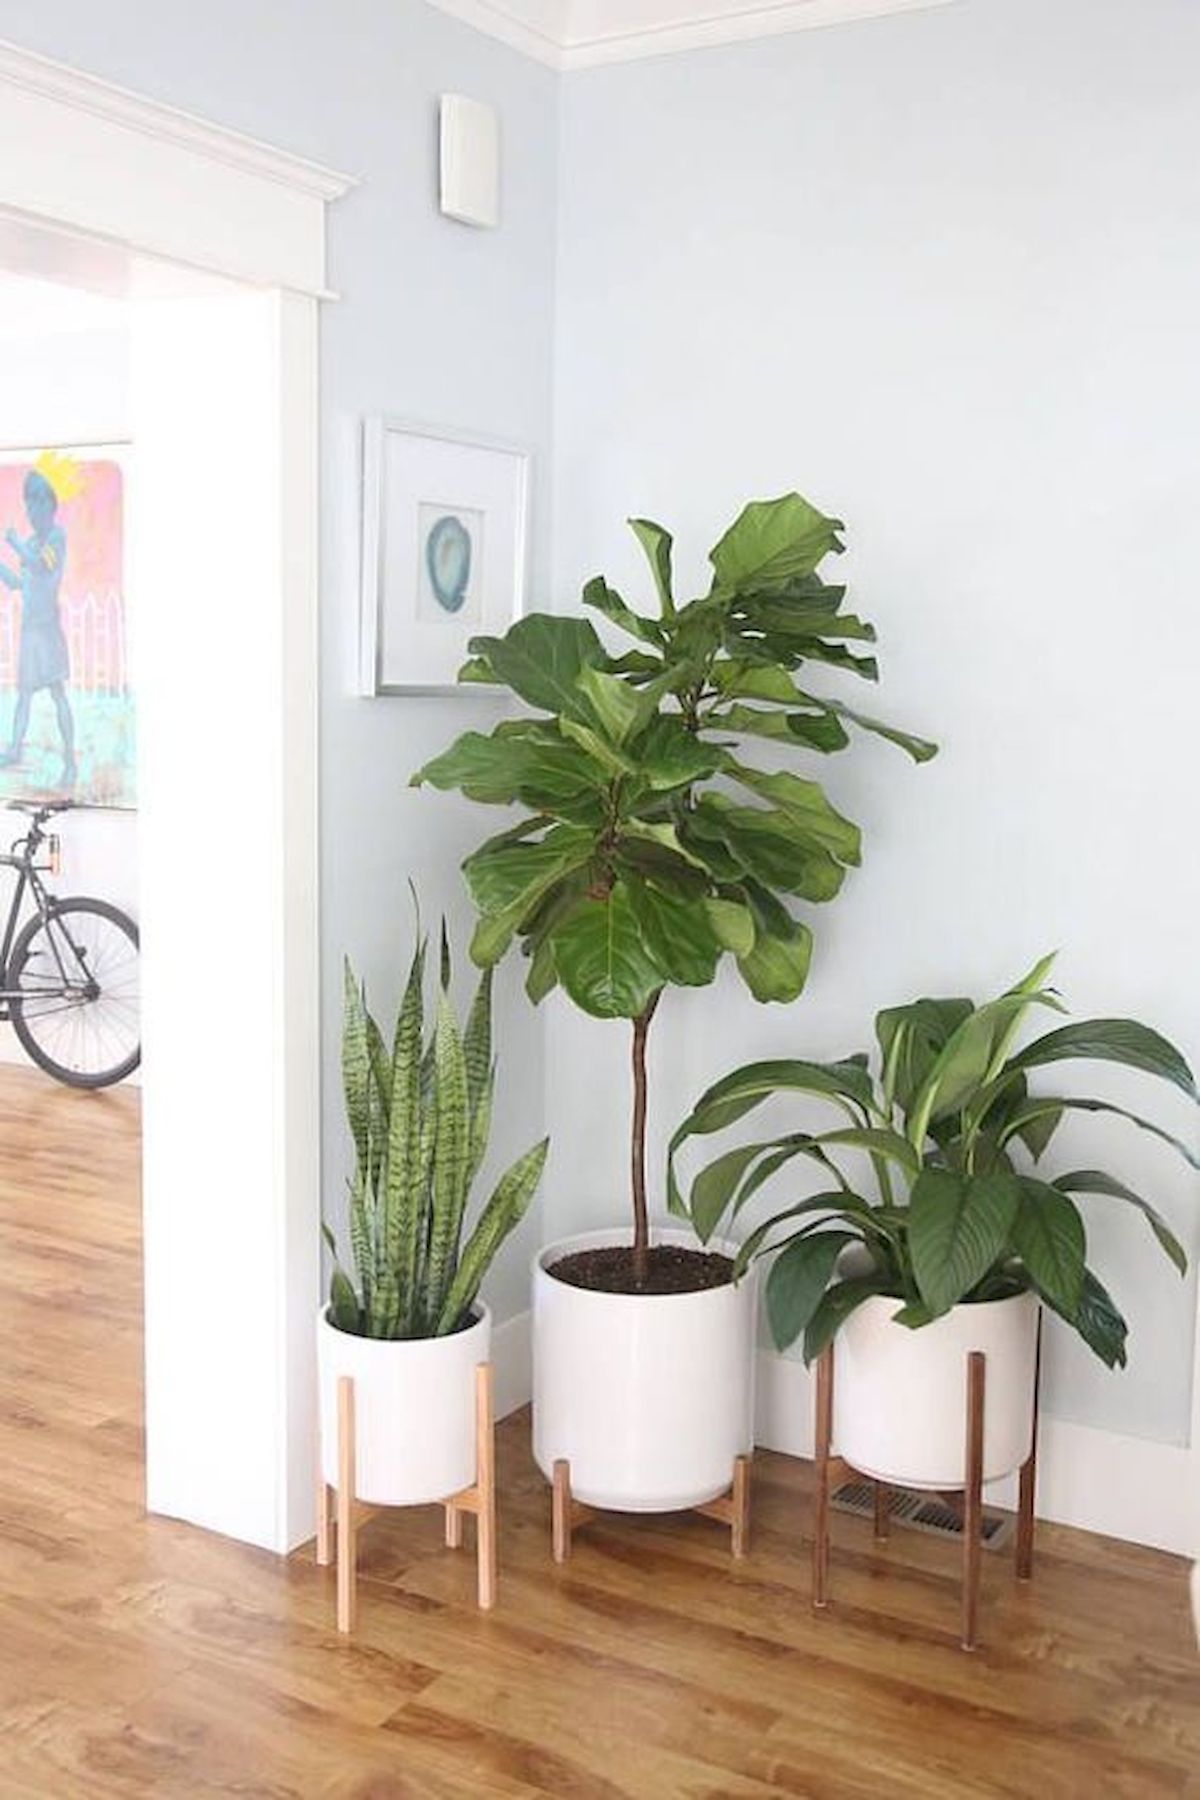 16 planting Apartment diy ideas